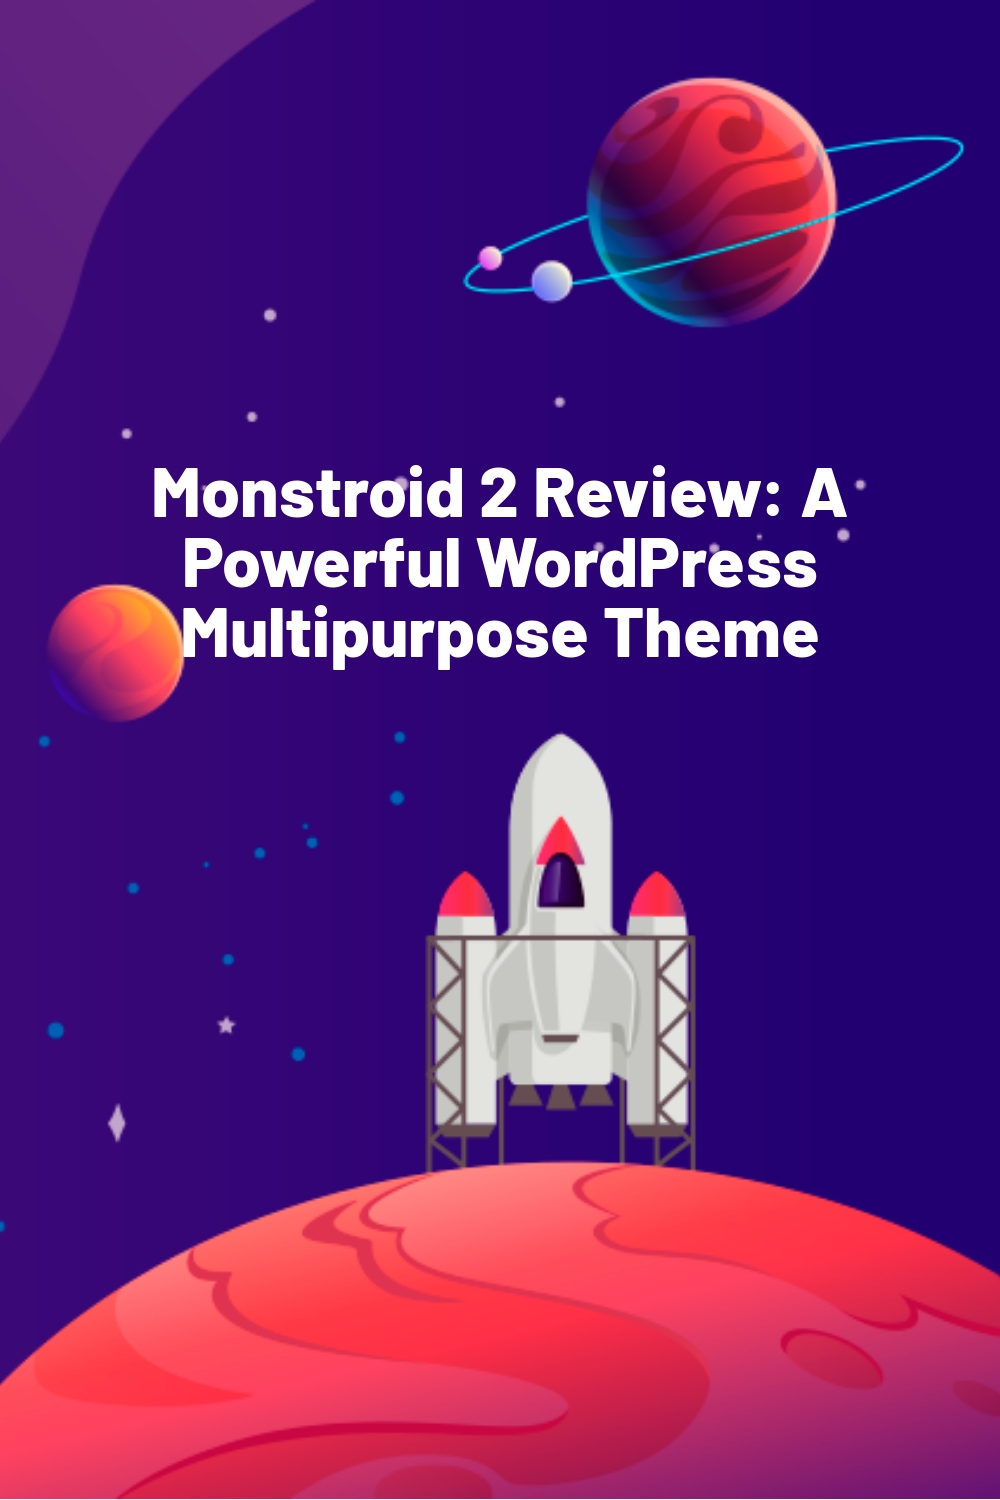 Monstroid 2 Review: A Powerful WordPress Multipurpose Theme